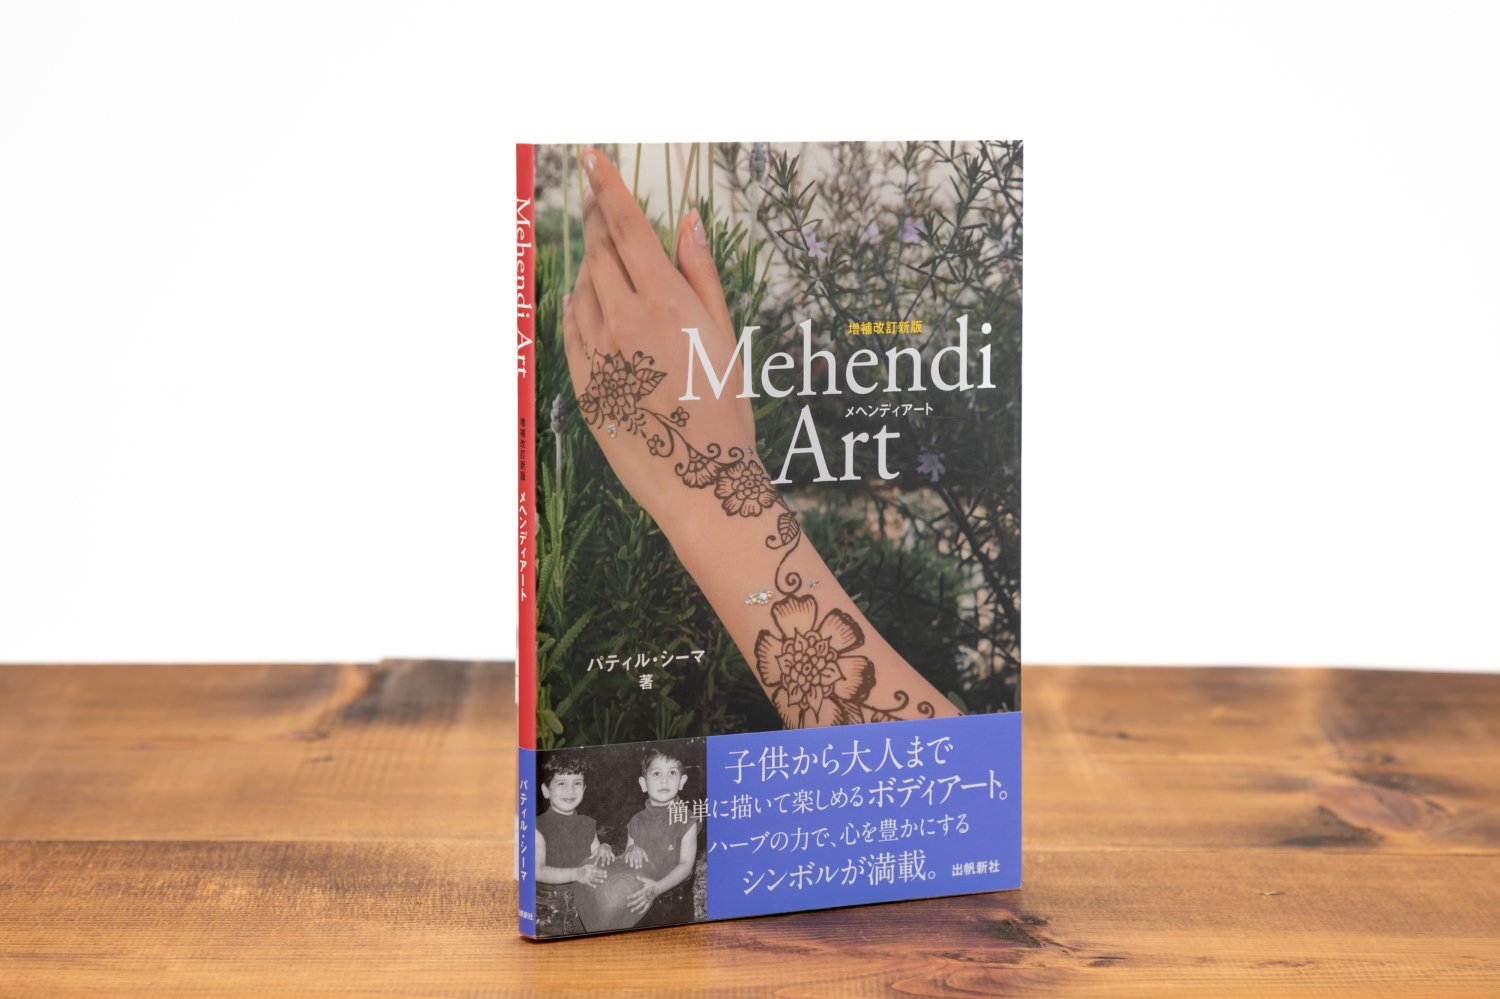 ◇『Mehendi・Art』 パティル・シーマ著書